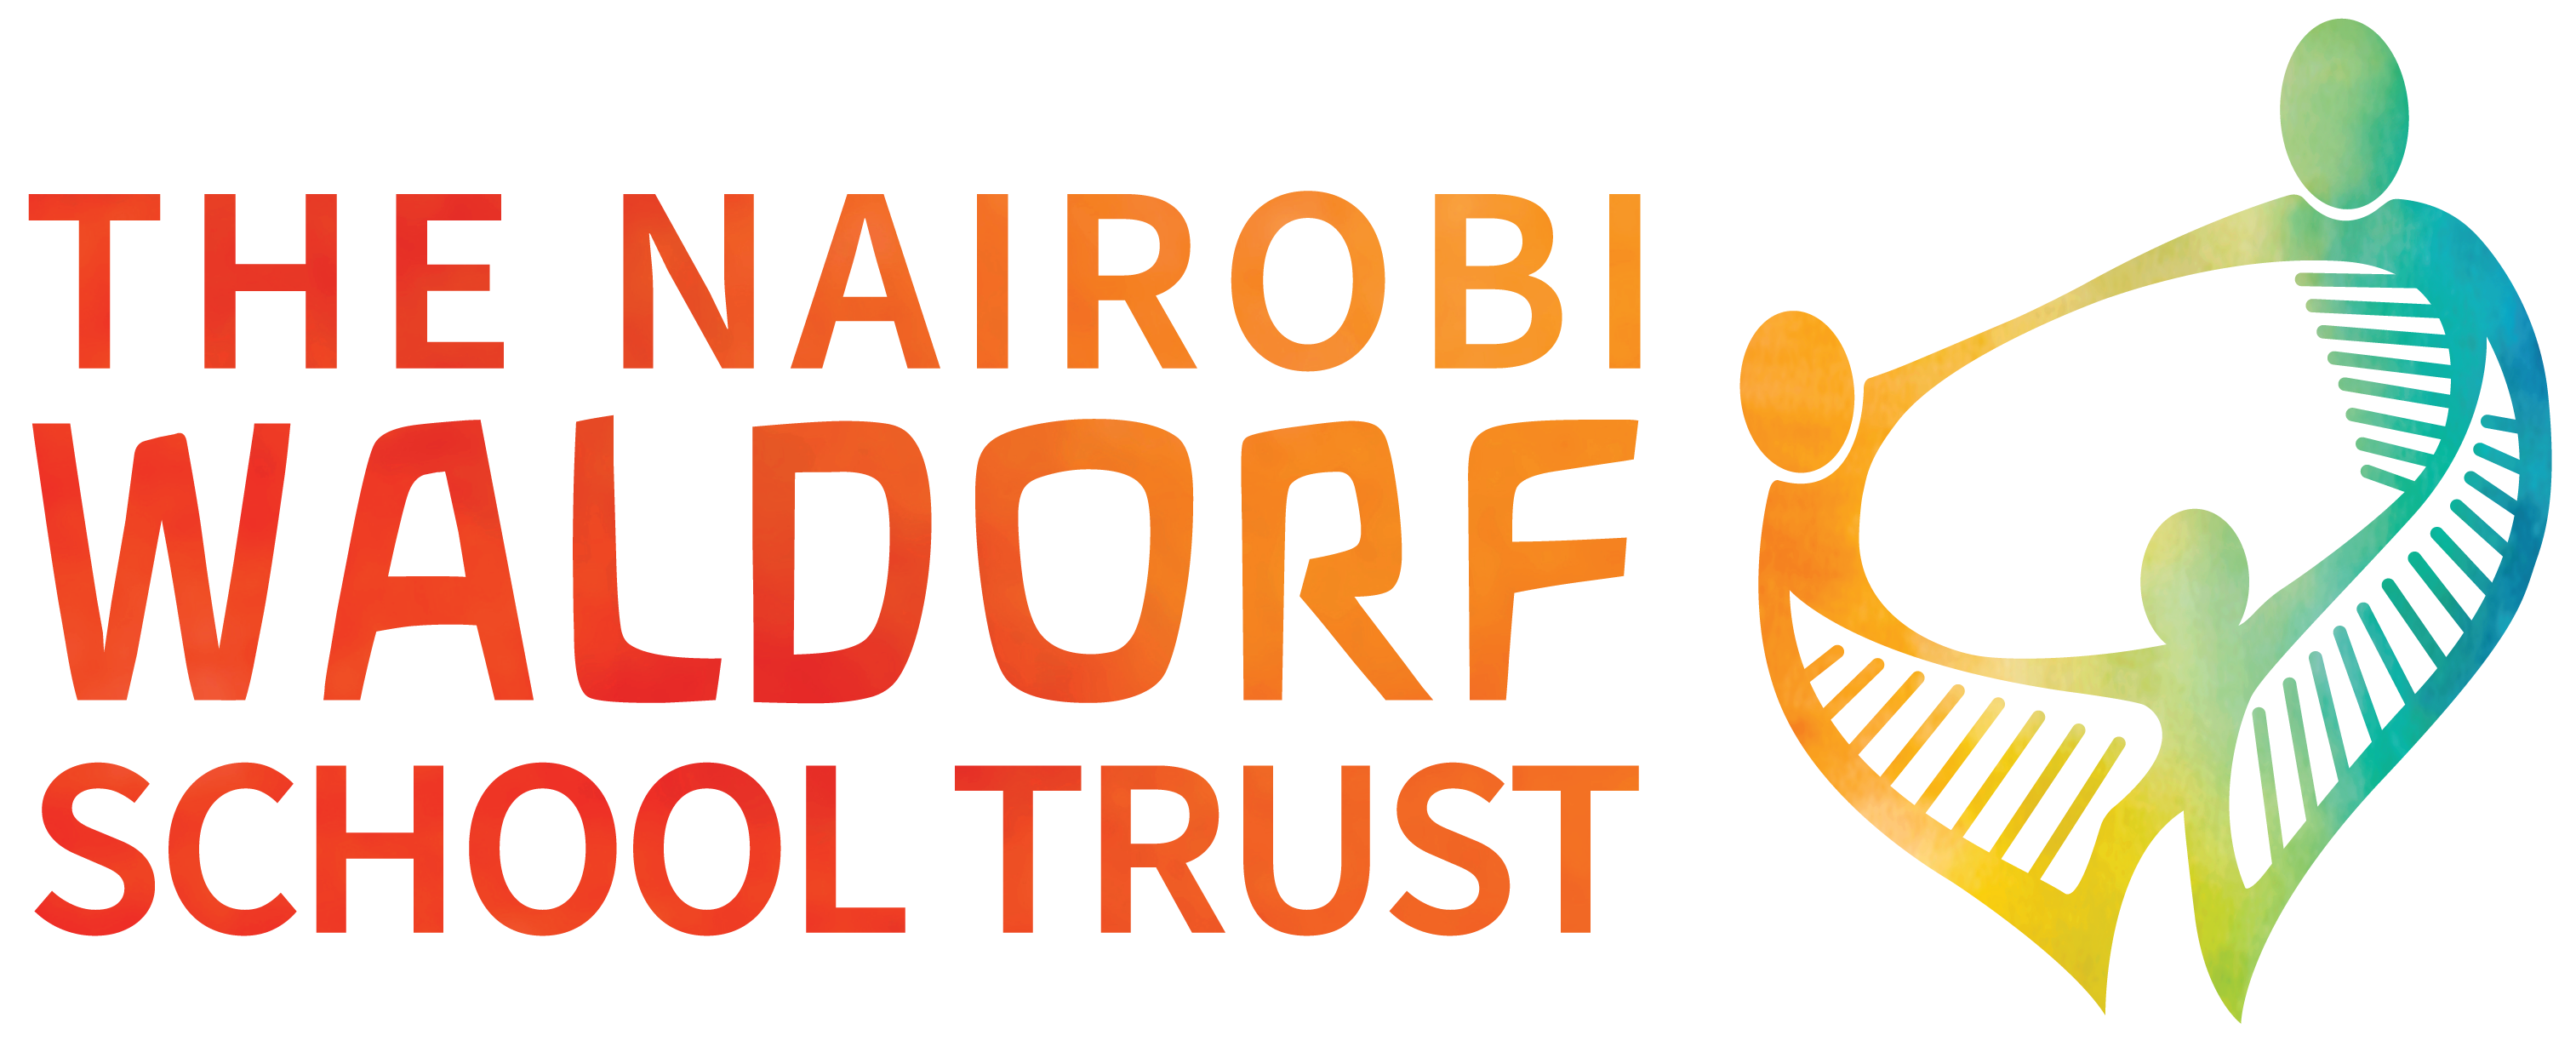 Nairobi Waldorf School Trust - Welcome to the Nairobi Waldorf School Trust